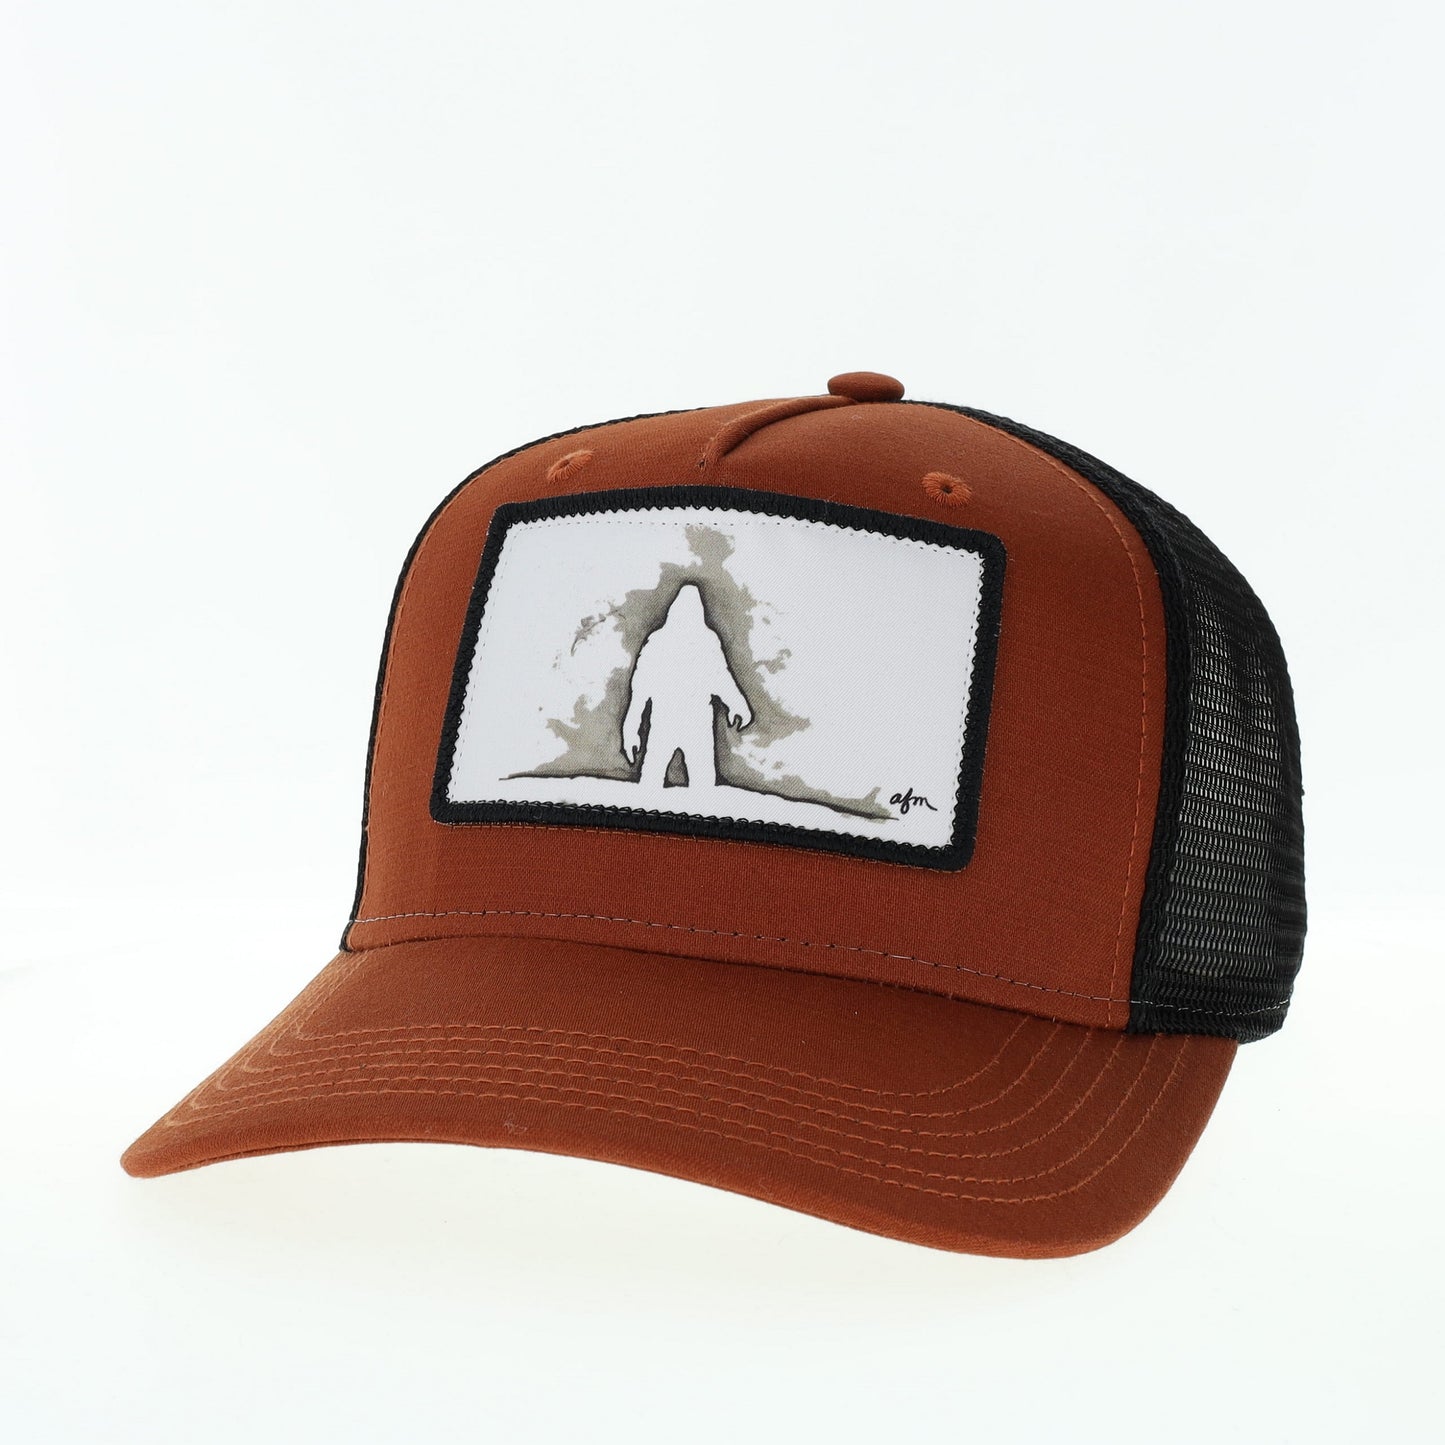 Yeti Roadie Trucker Hat in Copper Slub/Black